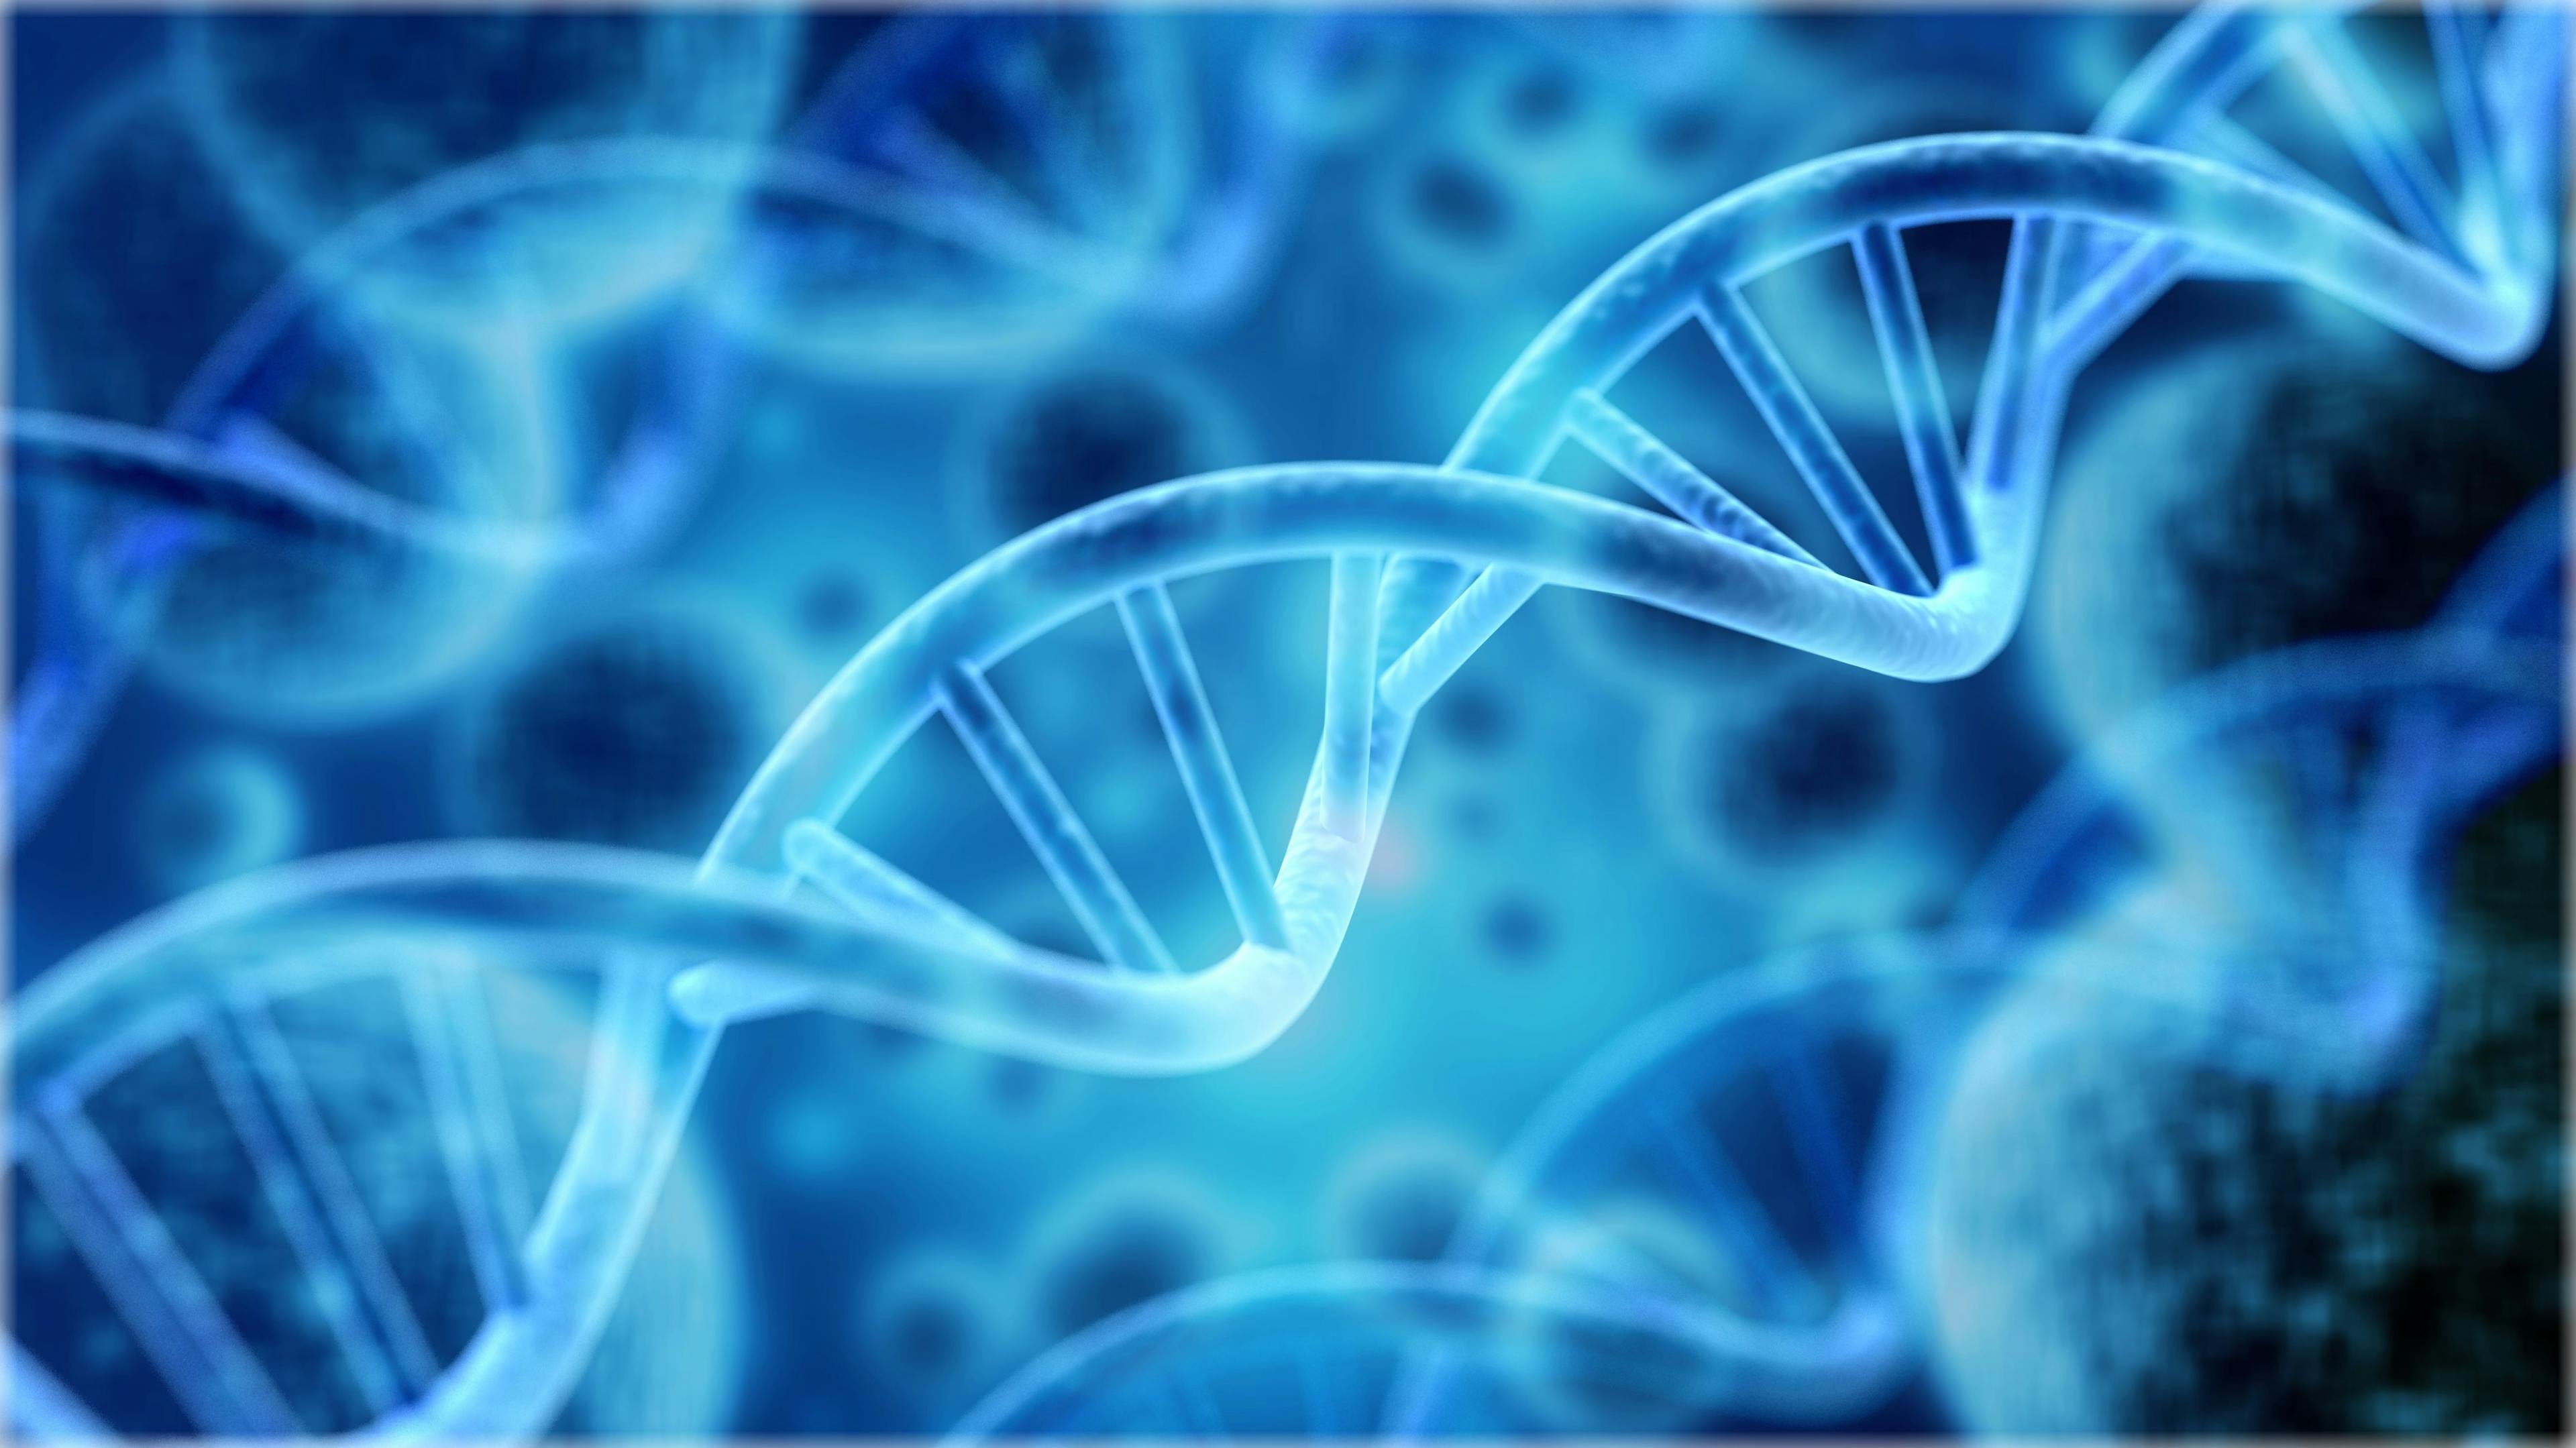 Cells under human DNA system illustration | Image Credit: © BillionPhotos.com - stock.adobe.com